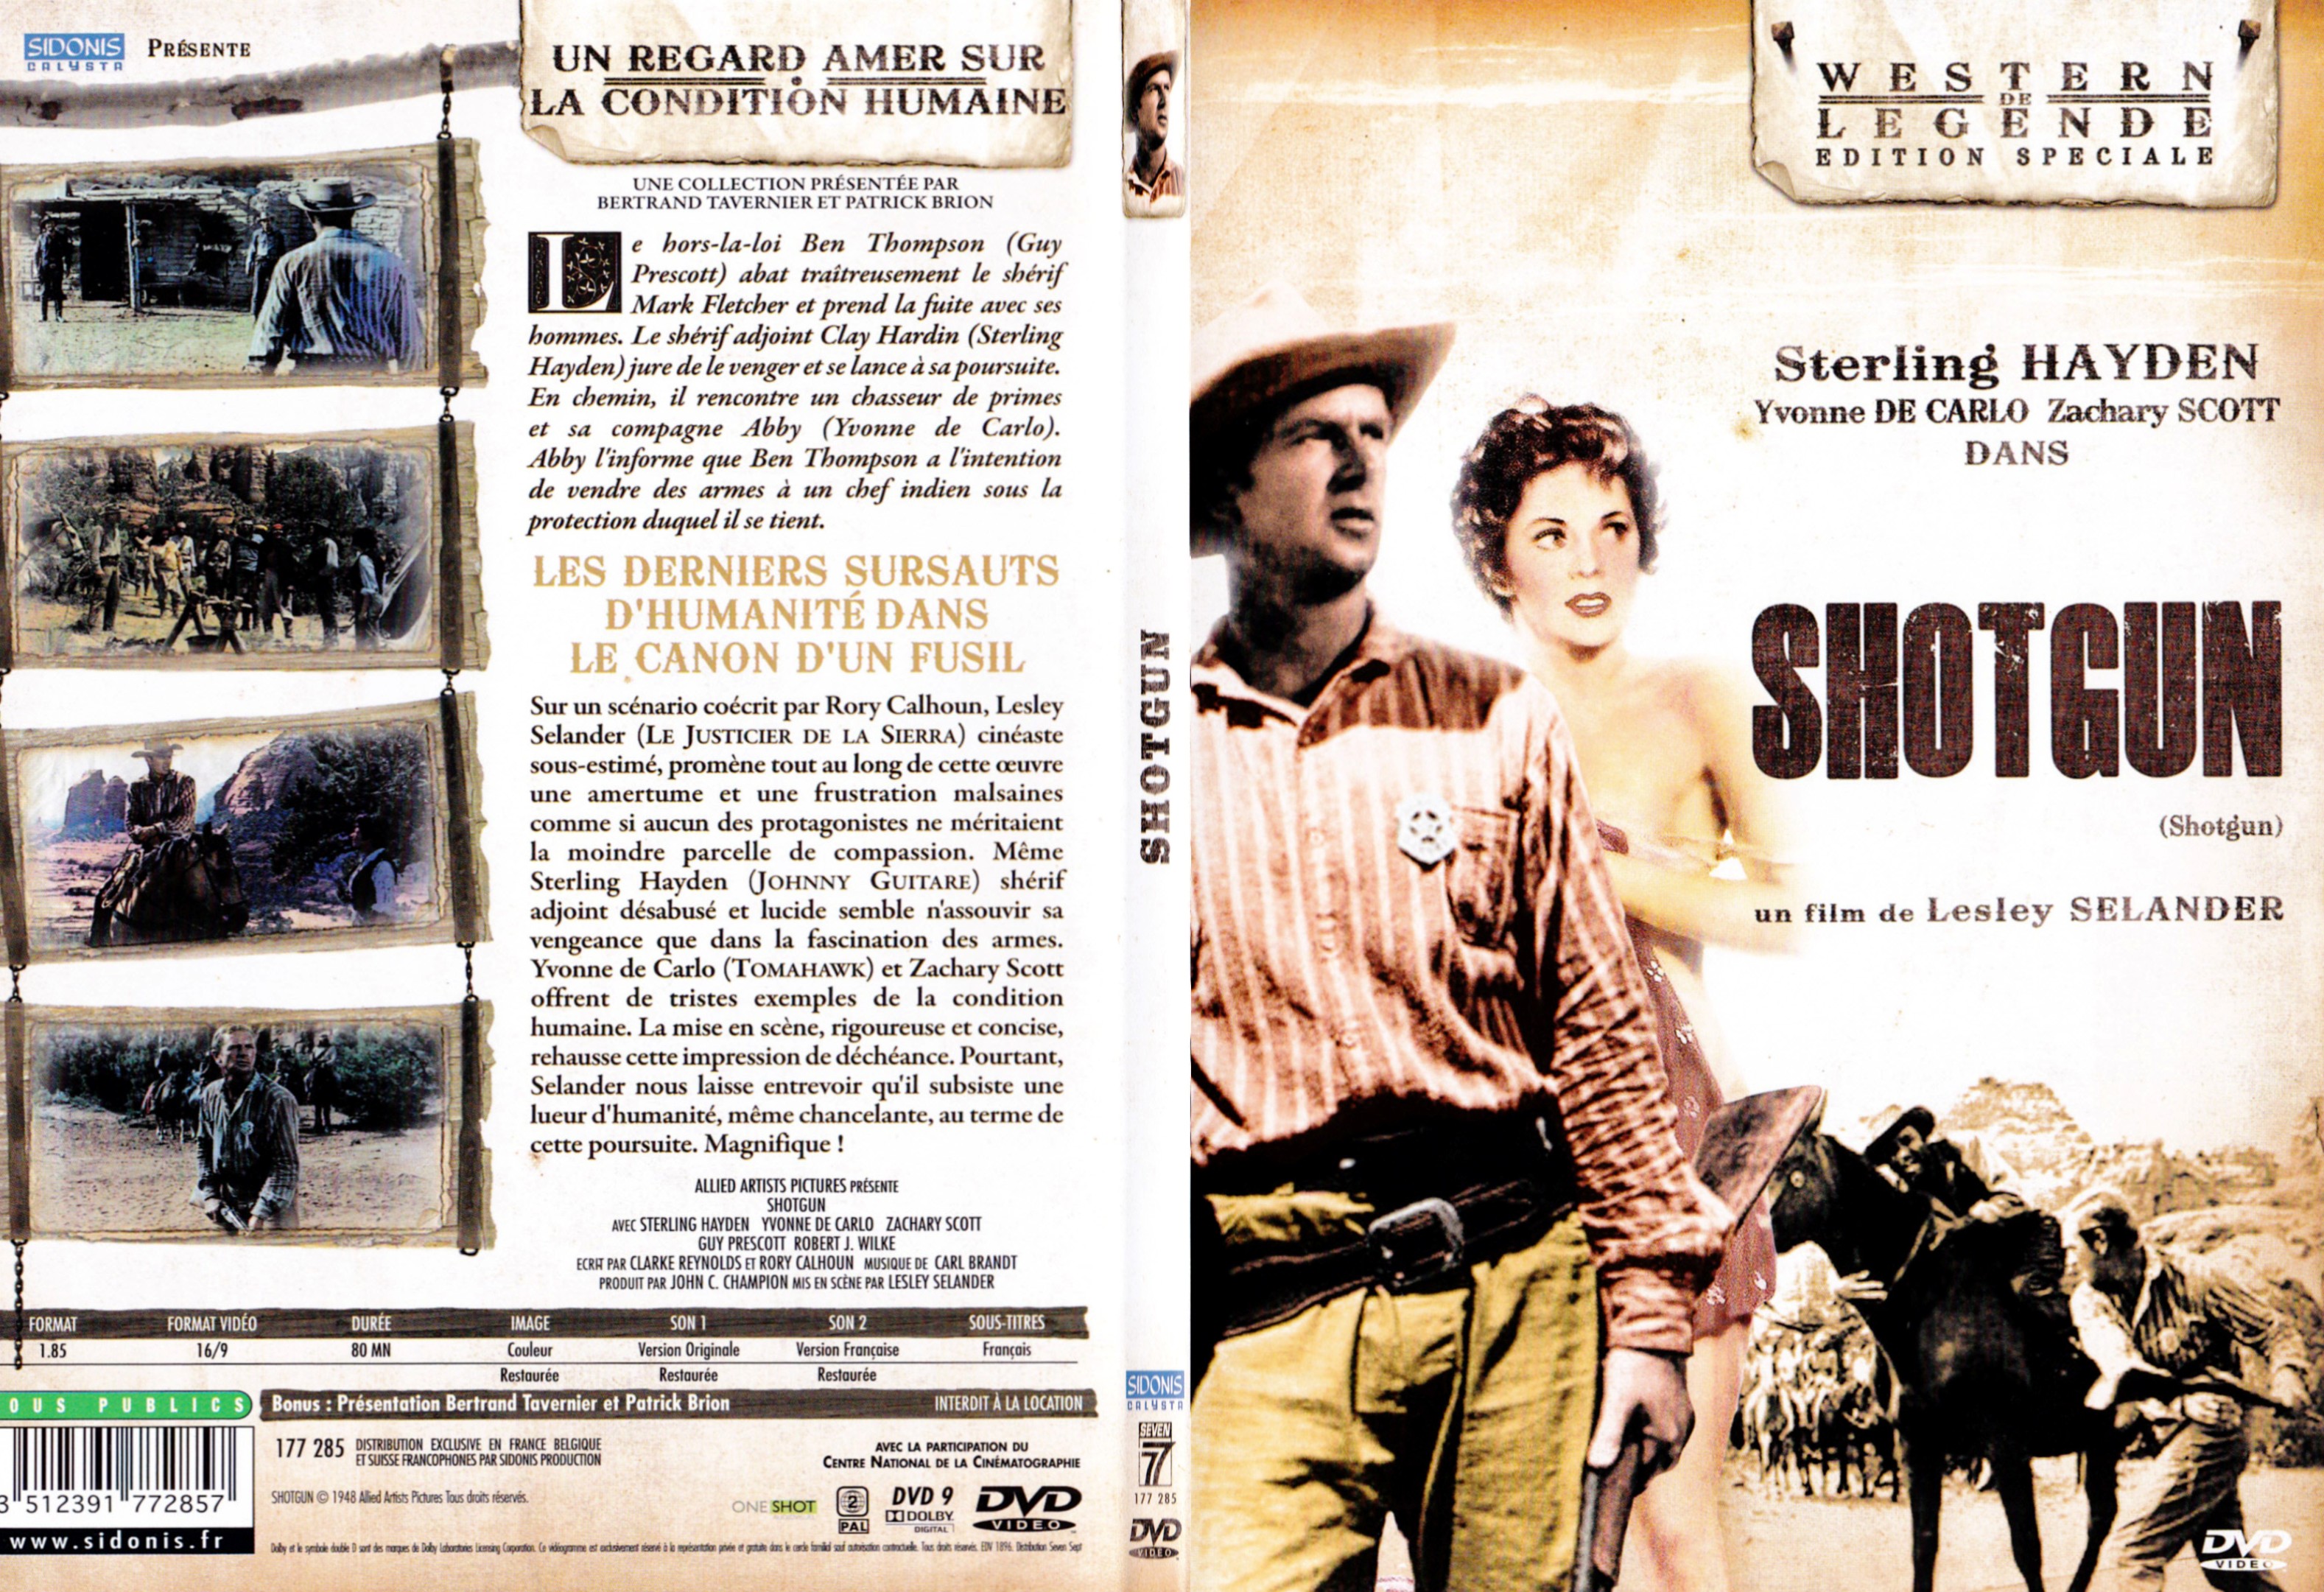 Jaquette DVD Shotgun - SLIM